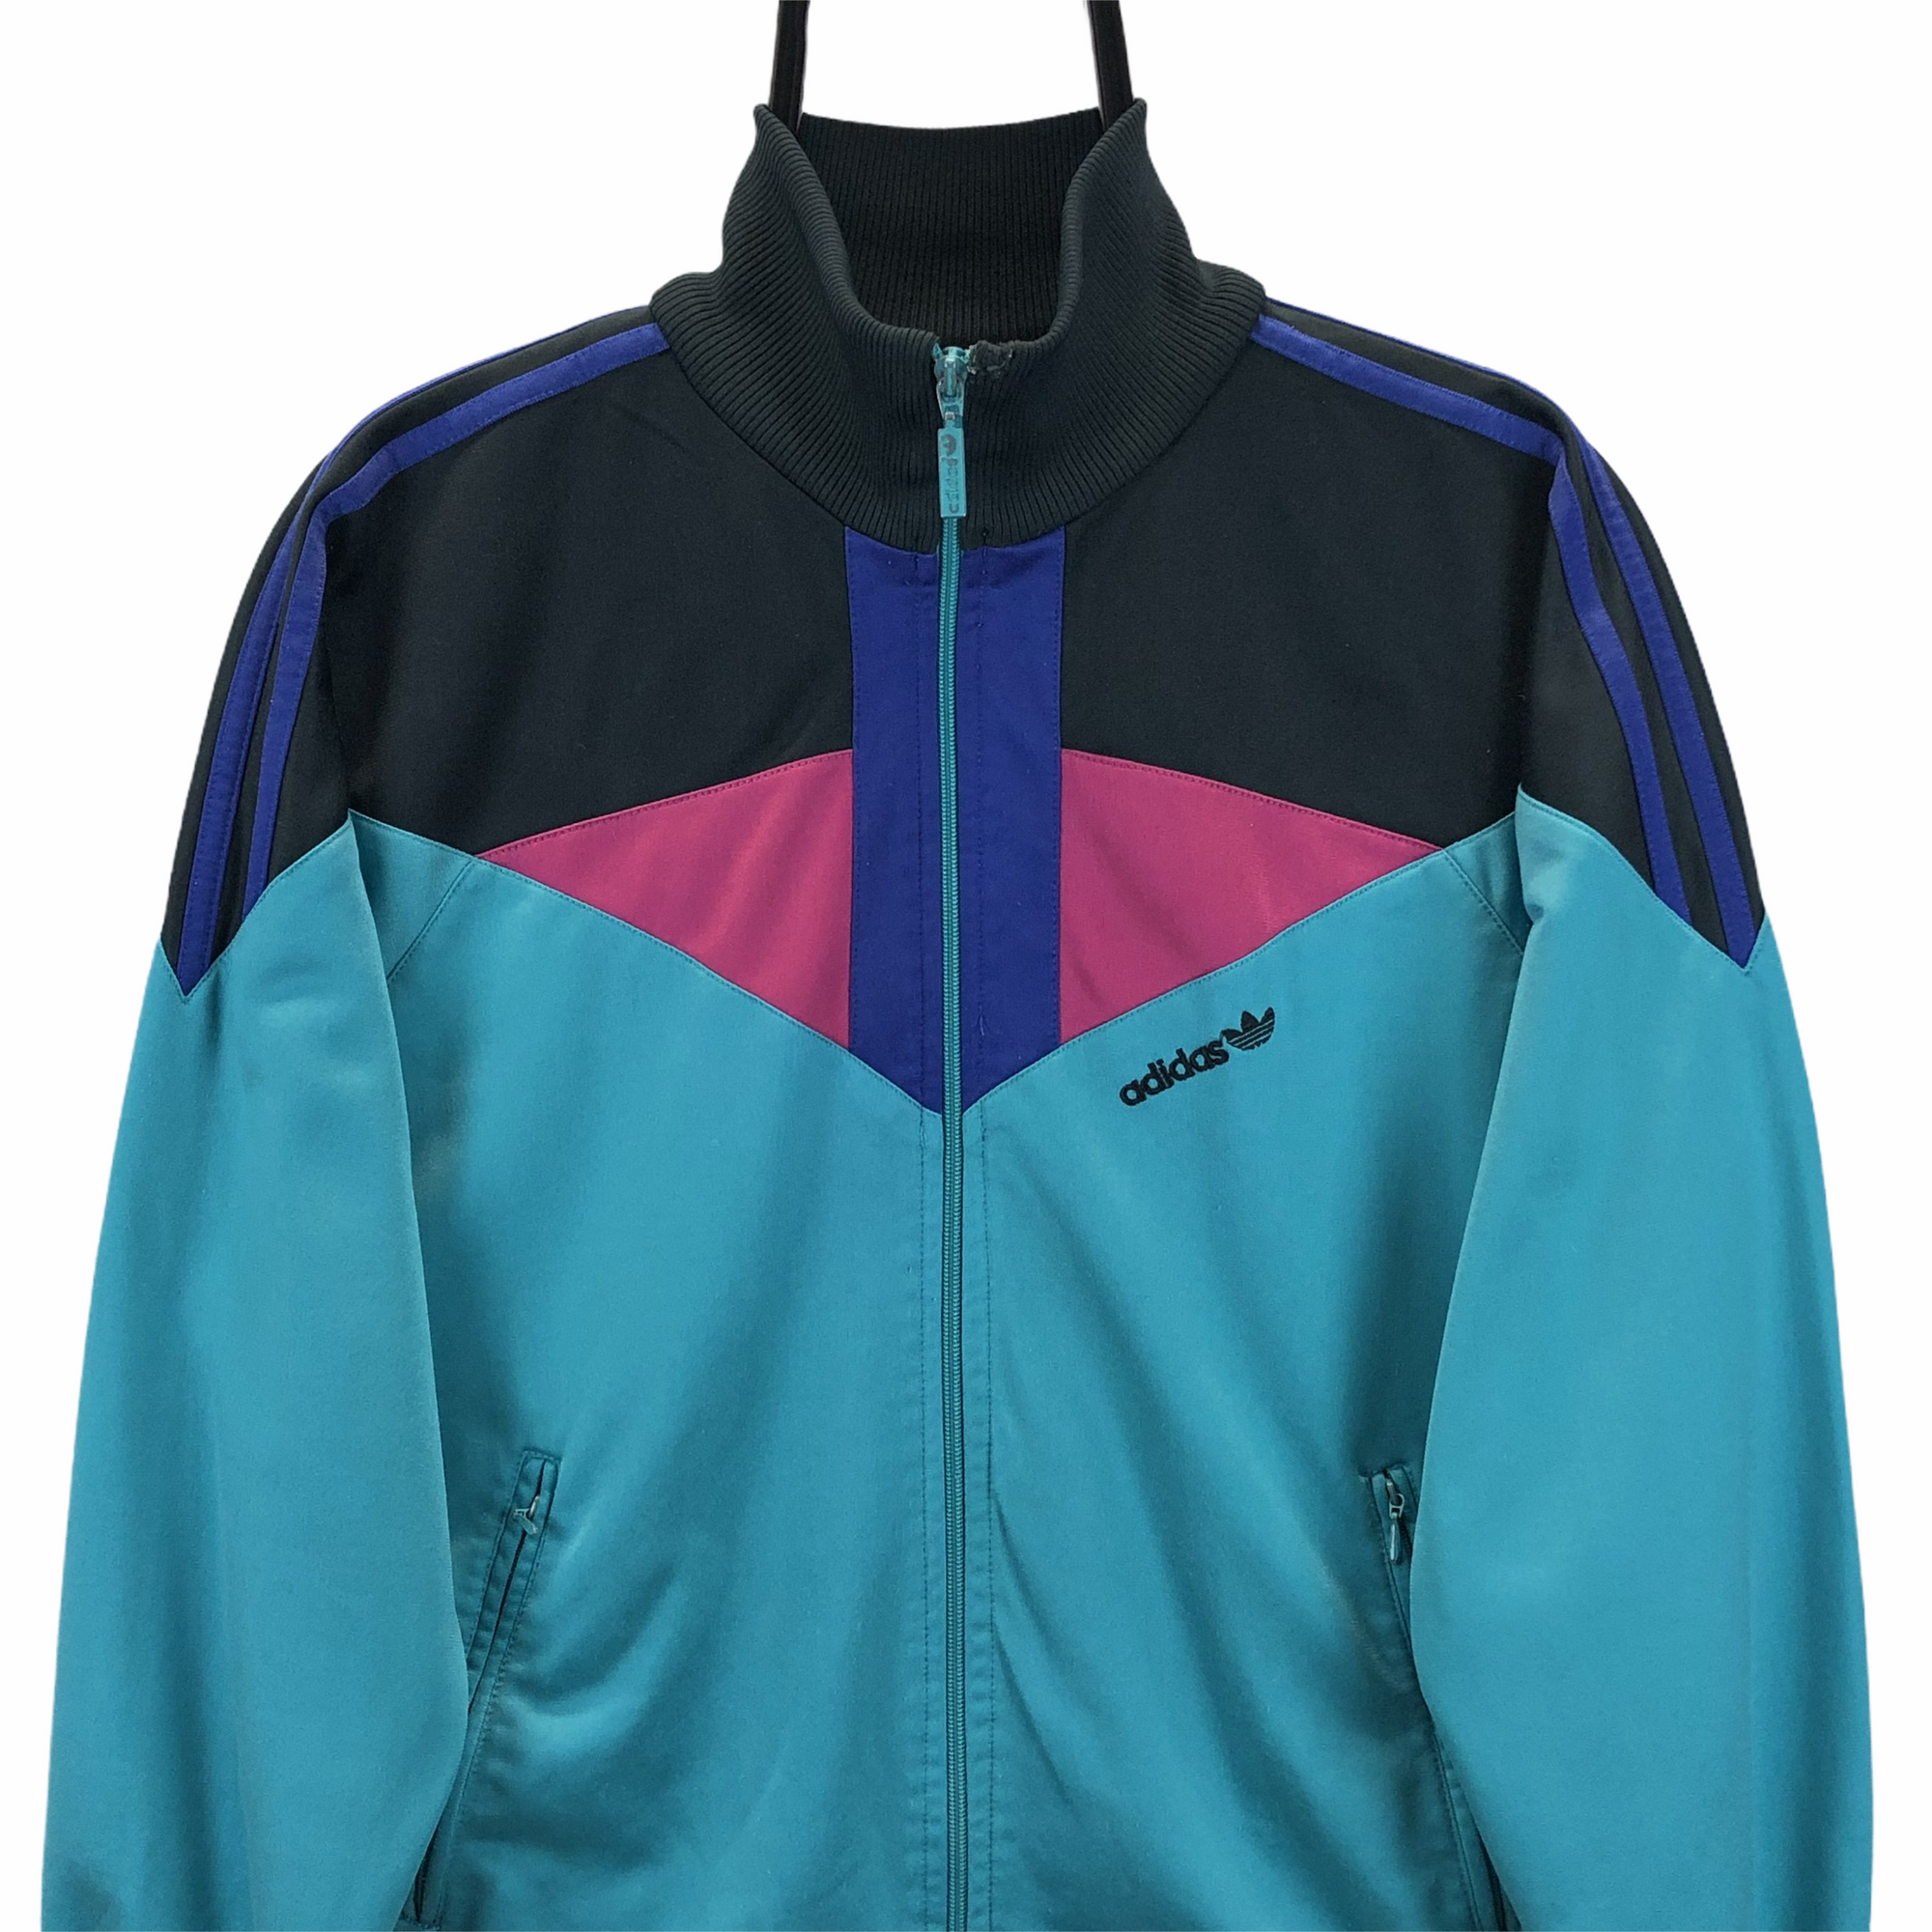 Vintage 90s Adidas Quad-Colour Track Jacket - Men's Small/Women's Medium